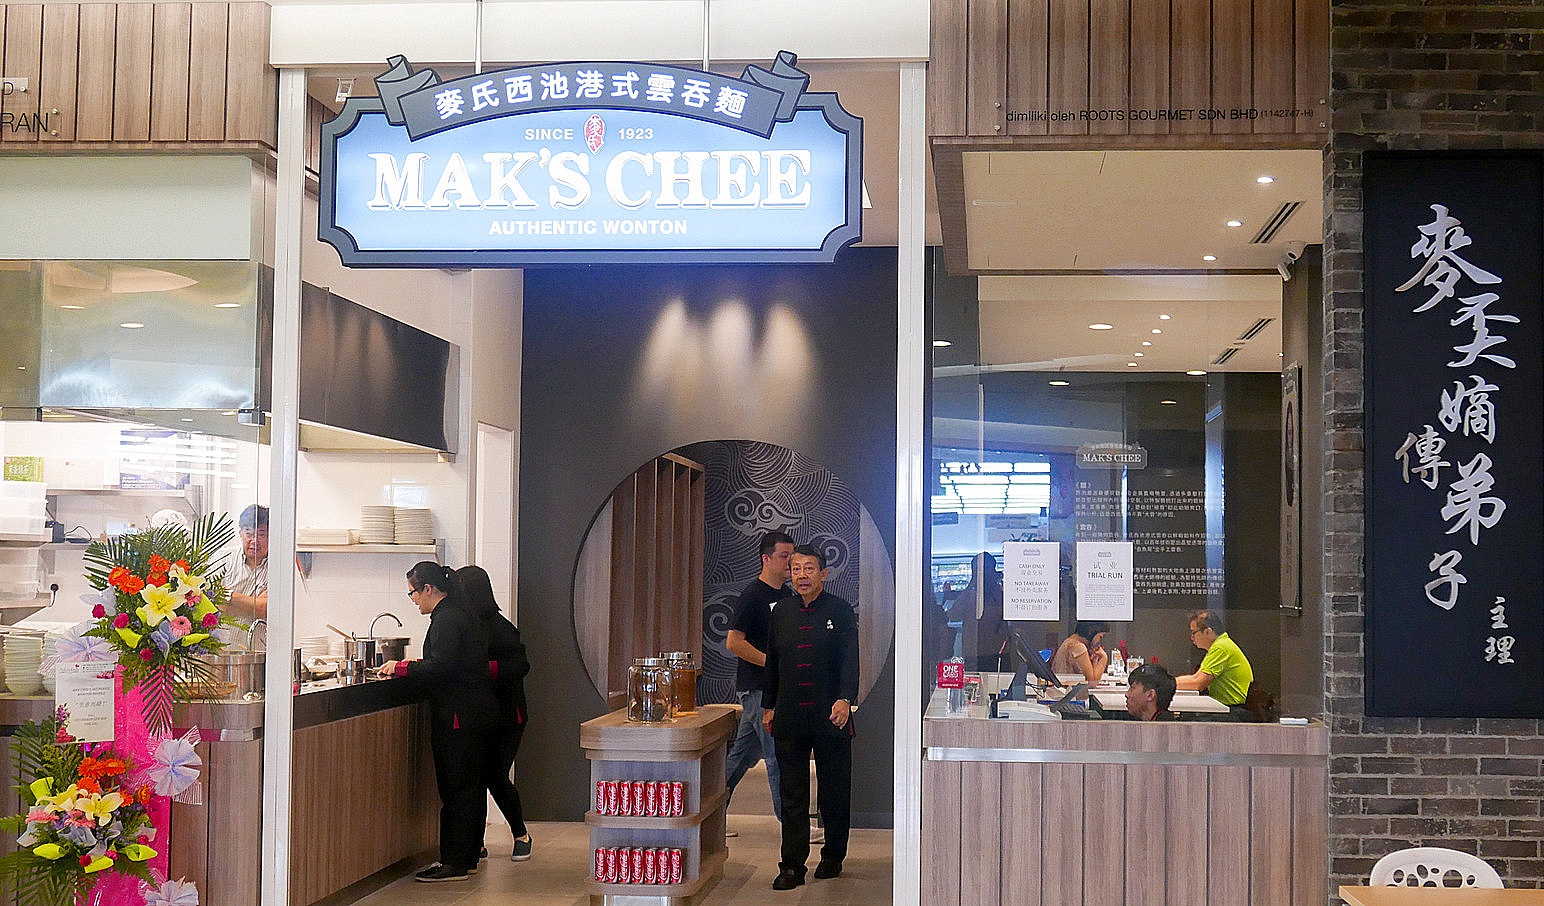 1. Mak's Chee